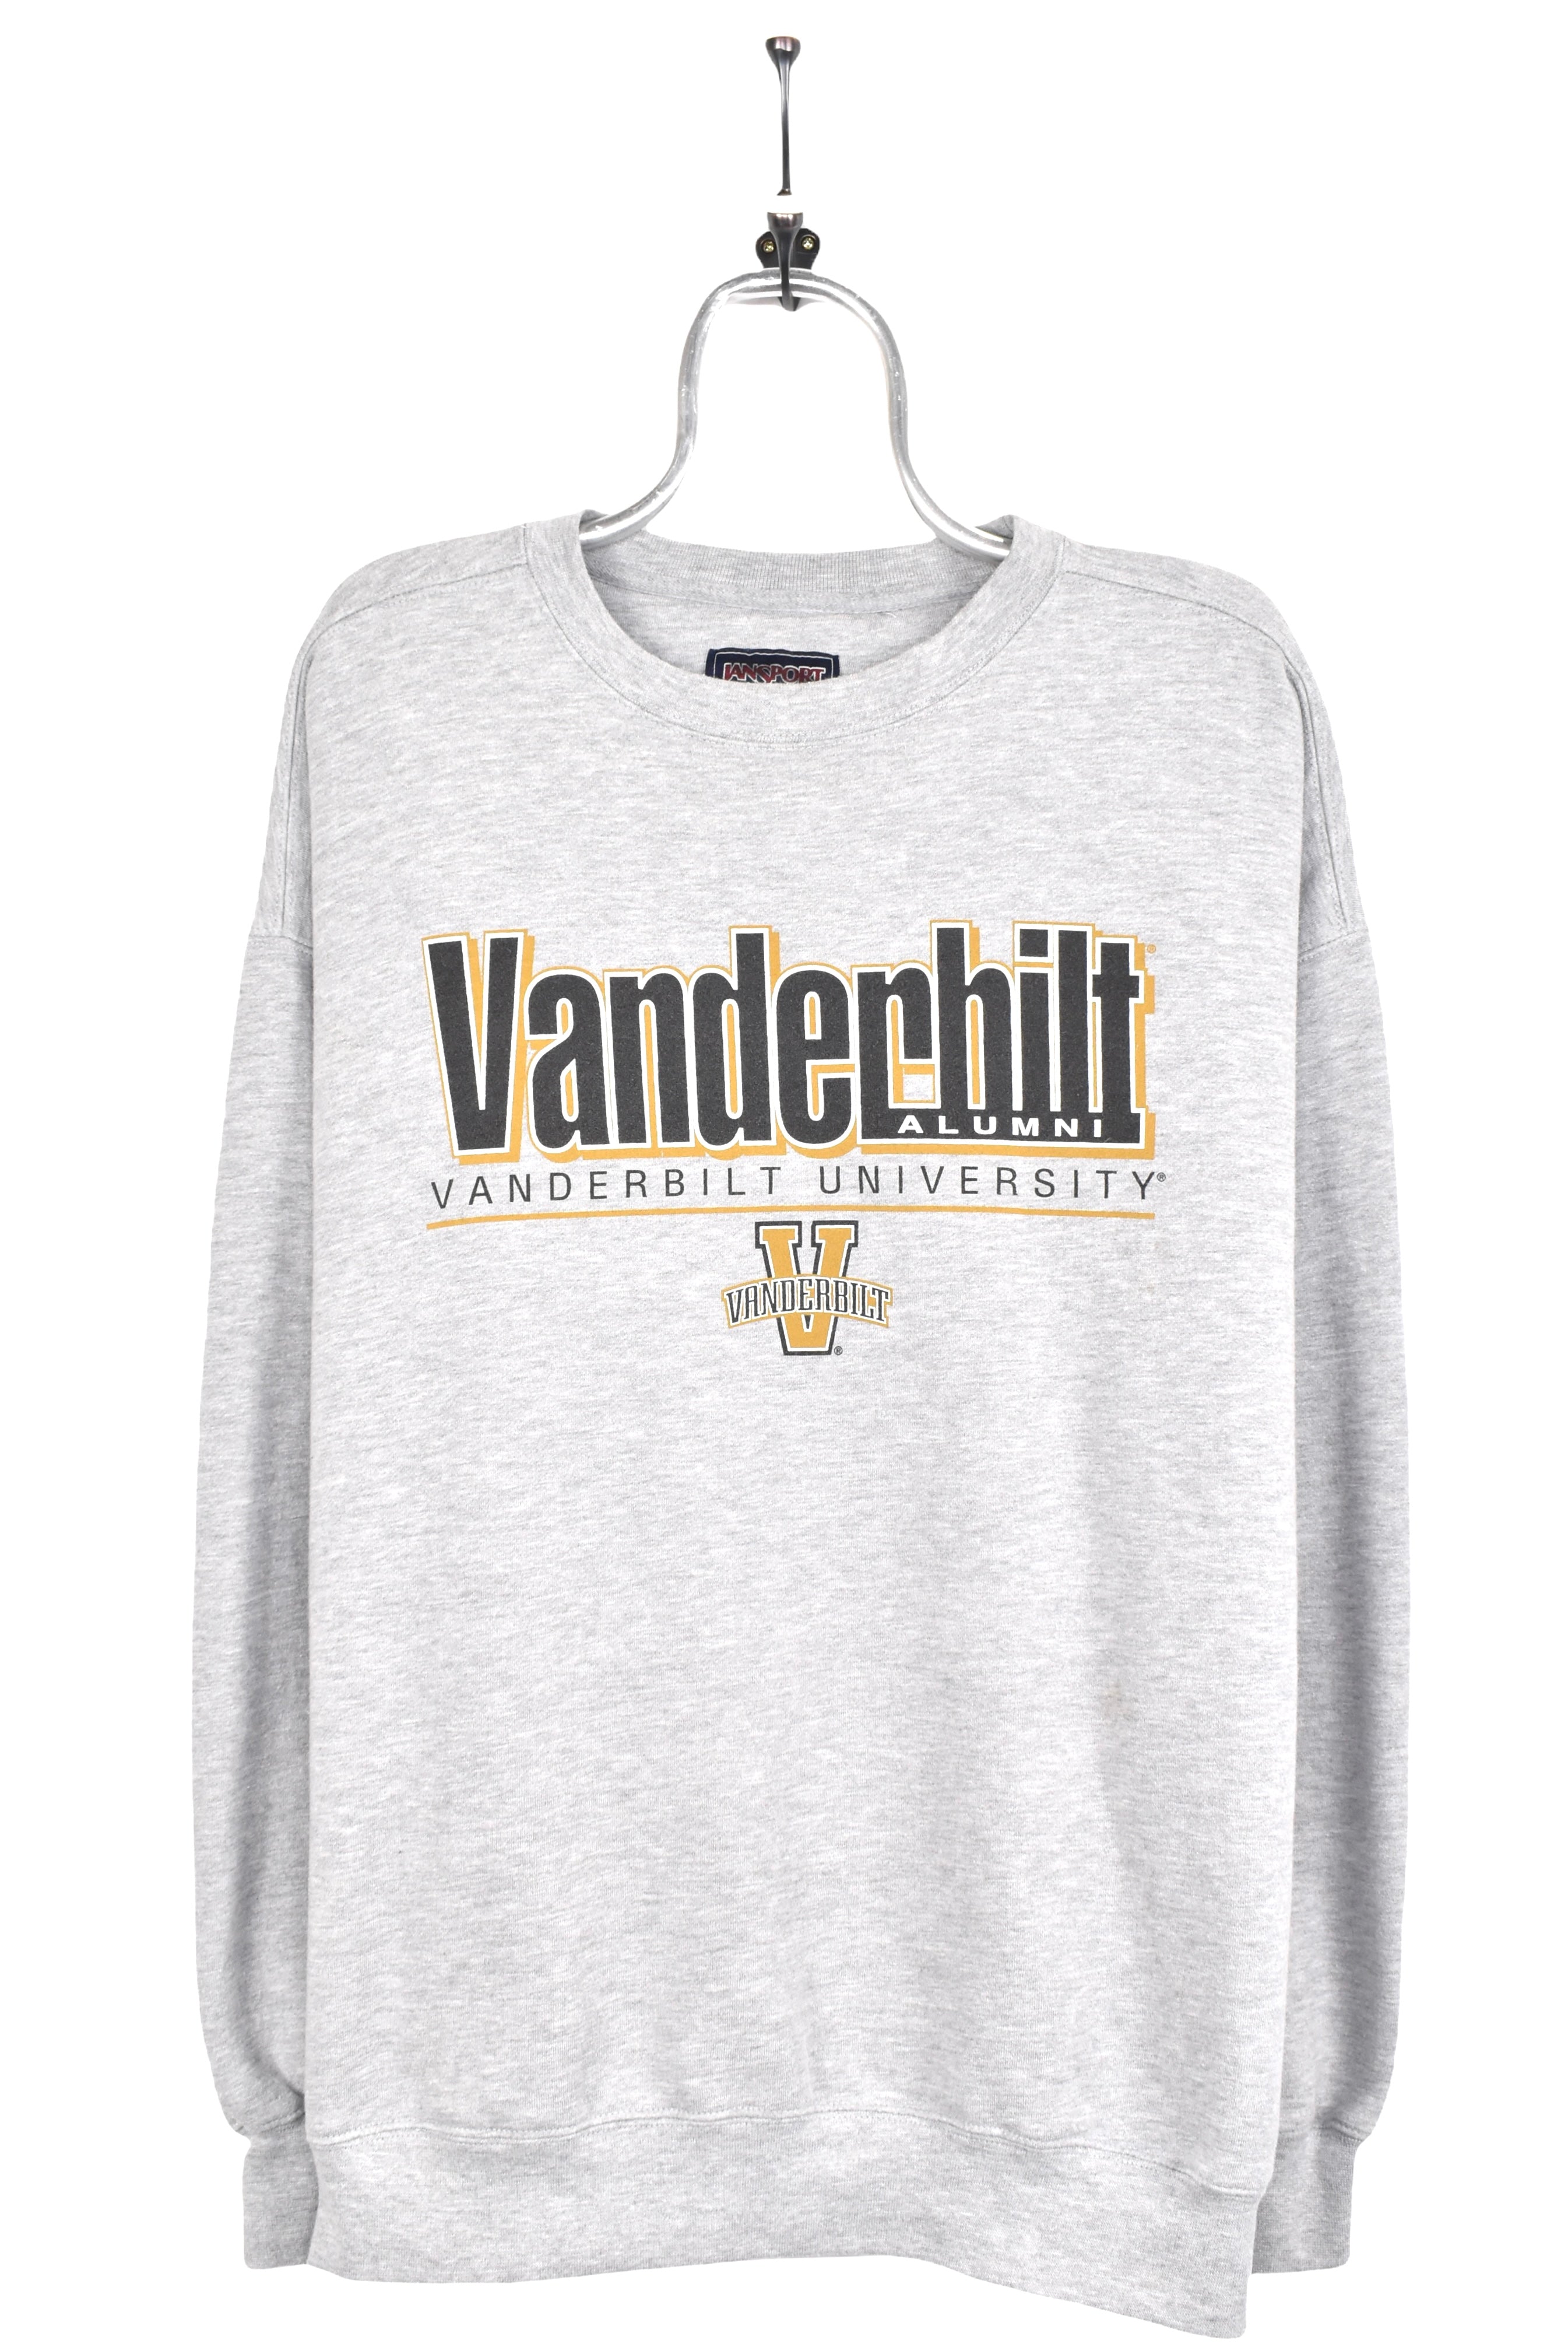 Vintage Vanderbilt University sweatshirt, grey graphic crewneck - AU XXL COLLEGE